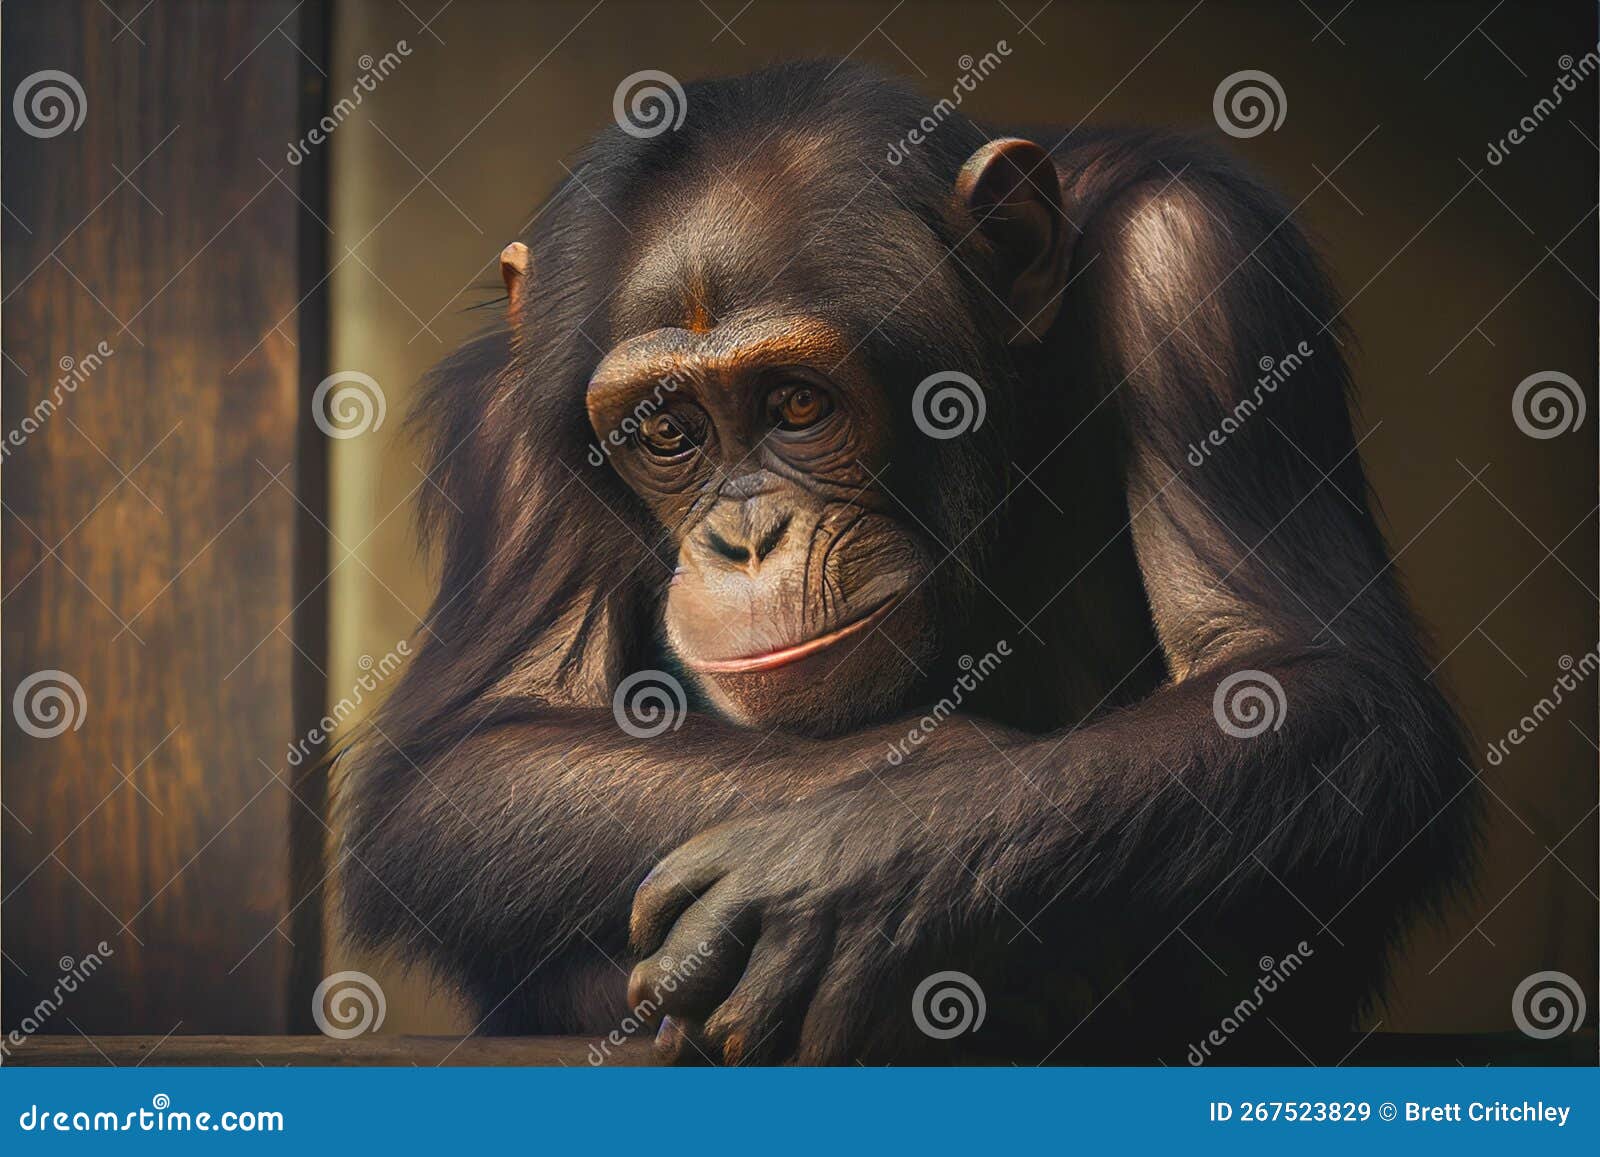 thoughtful thinking chimp ape primate portrait not monkey chimpanzee